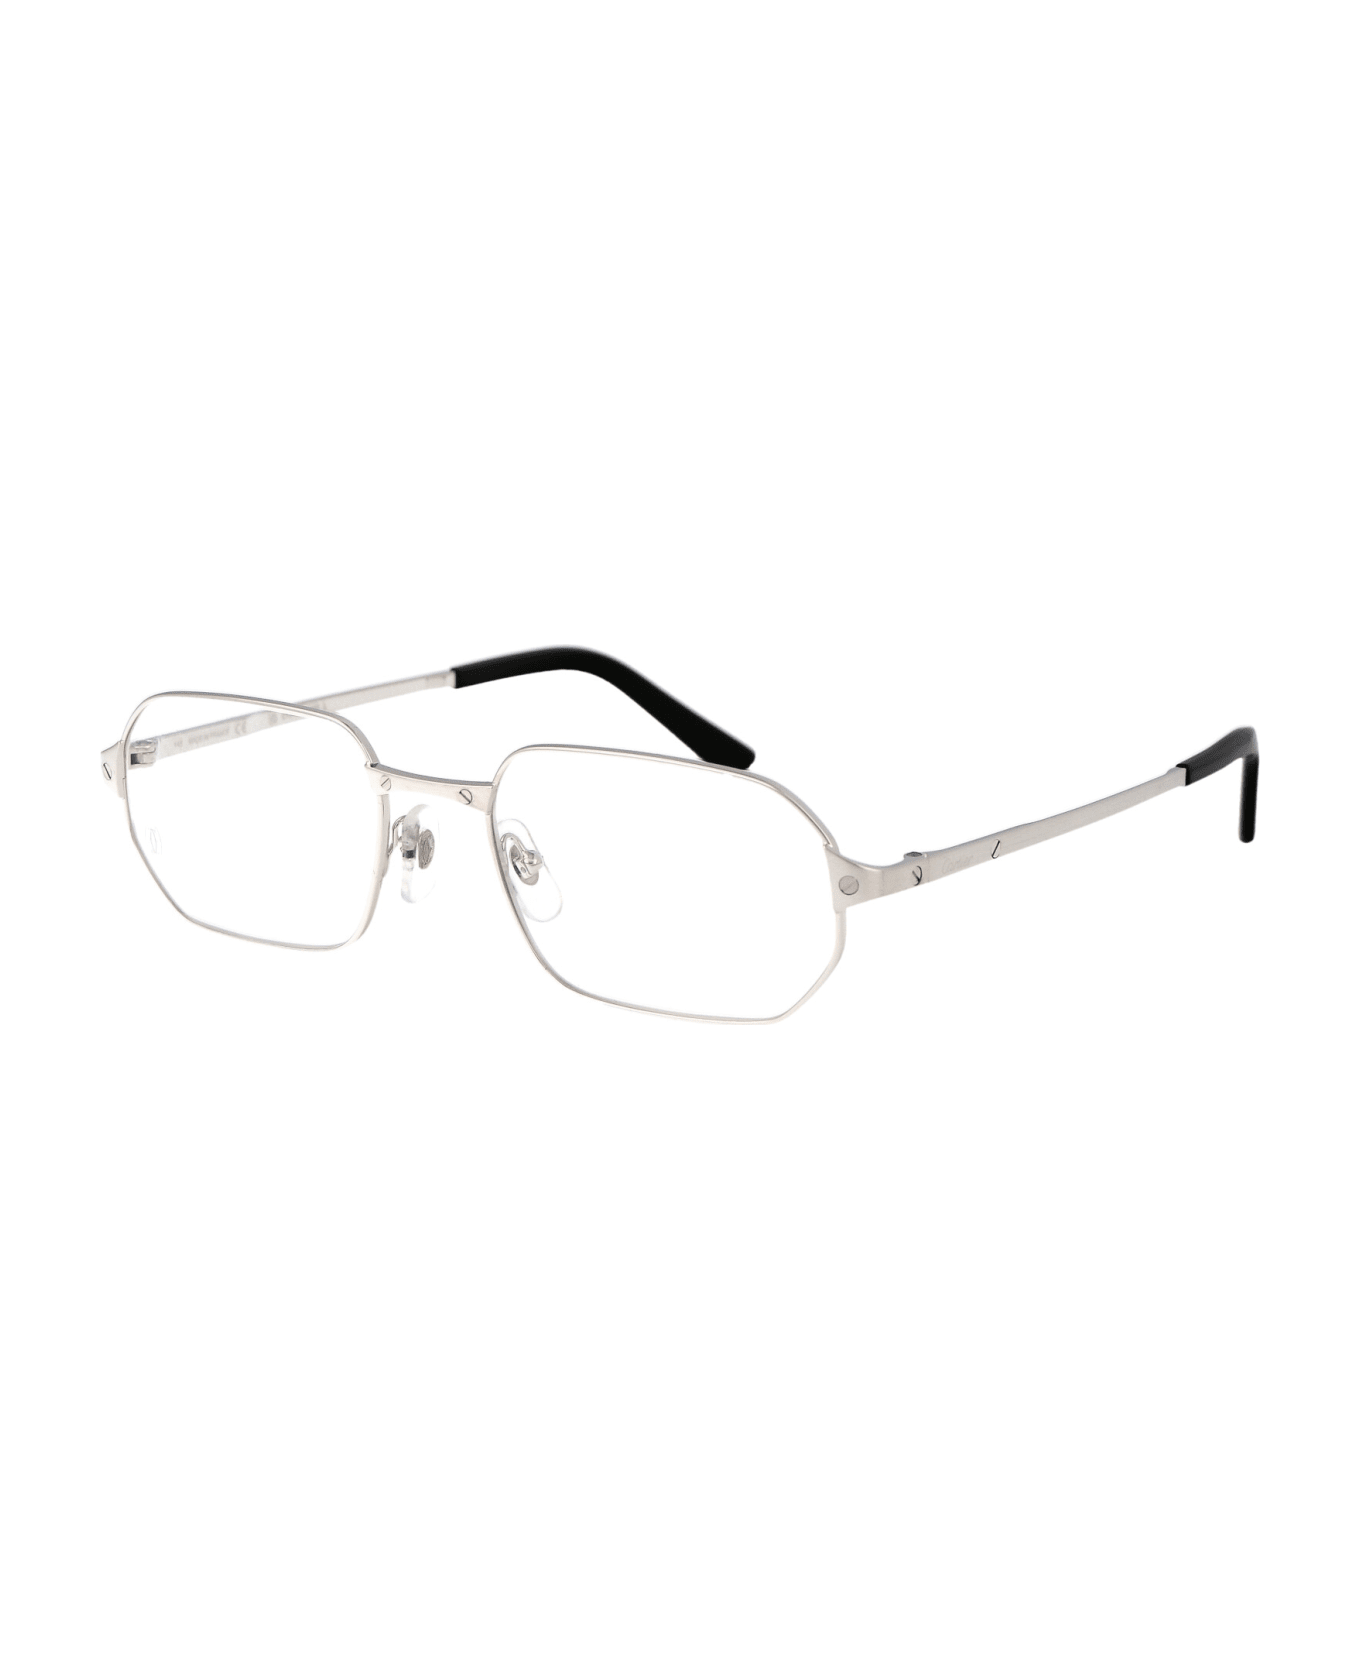 Cartier Eyewear Ct0442o Glasses - 002 SILVER SILVER TRANSPARENT